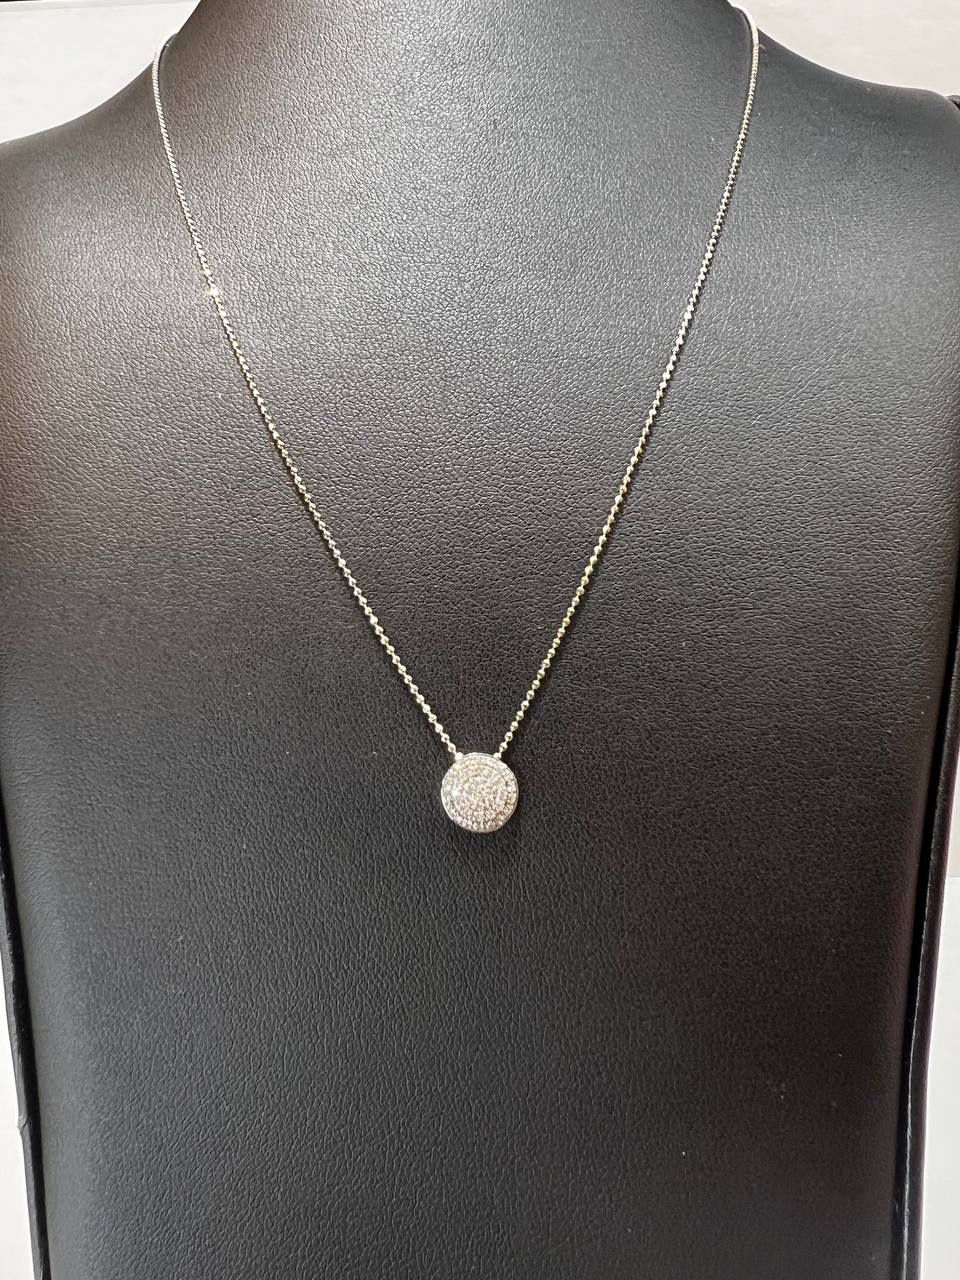 18k white gold necklace with diamond pendant